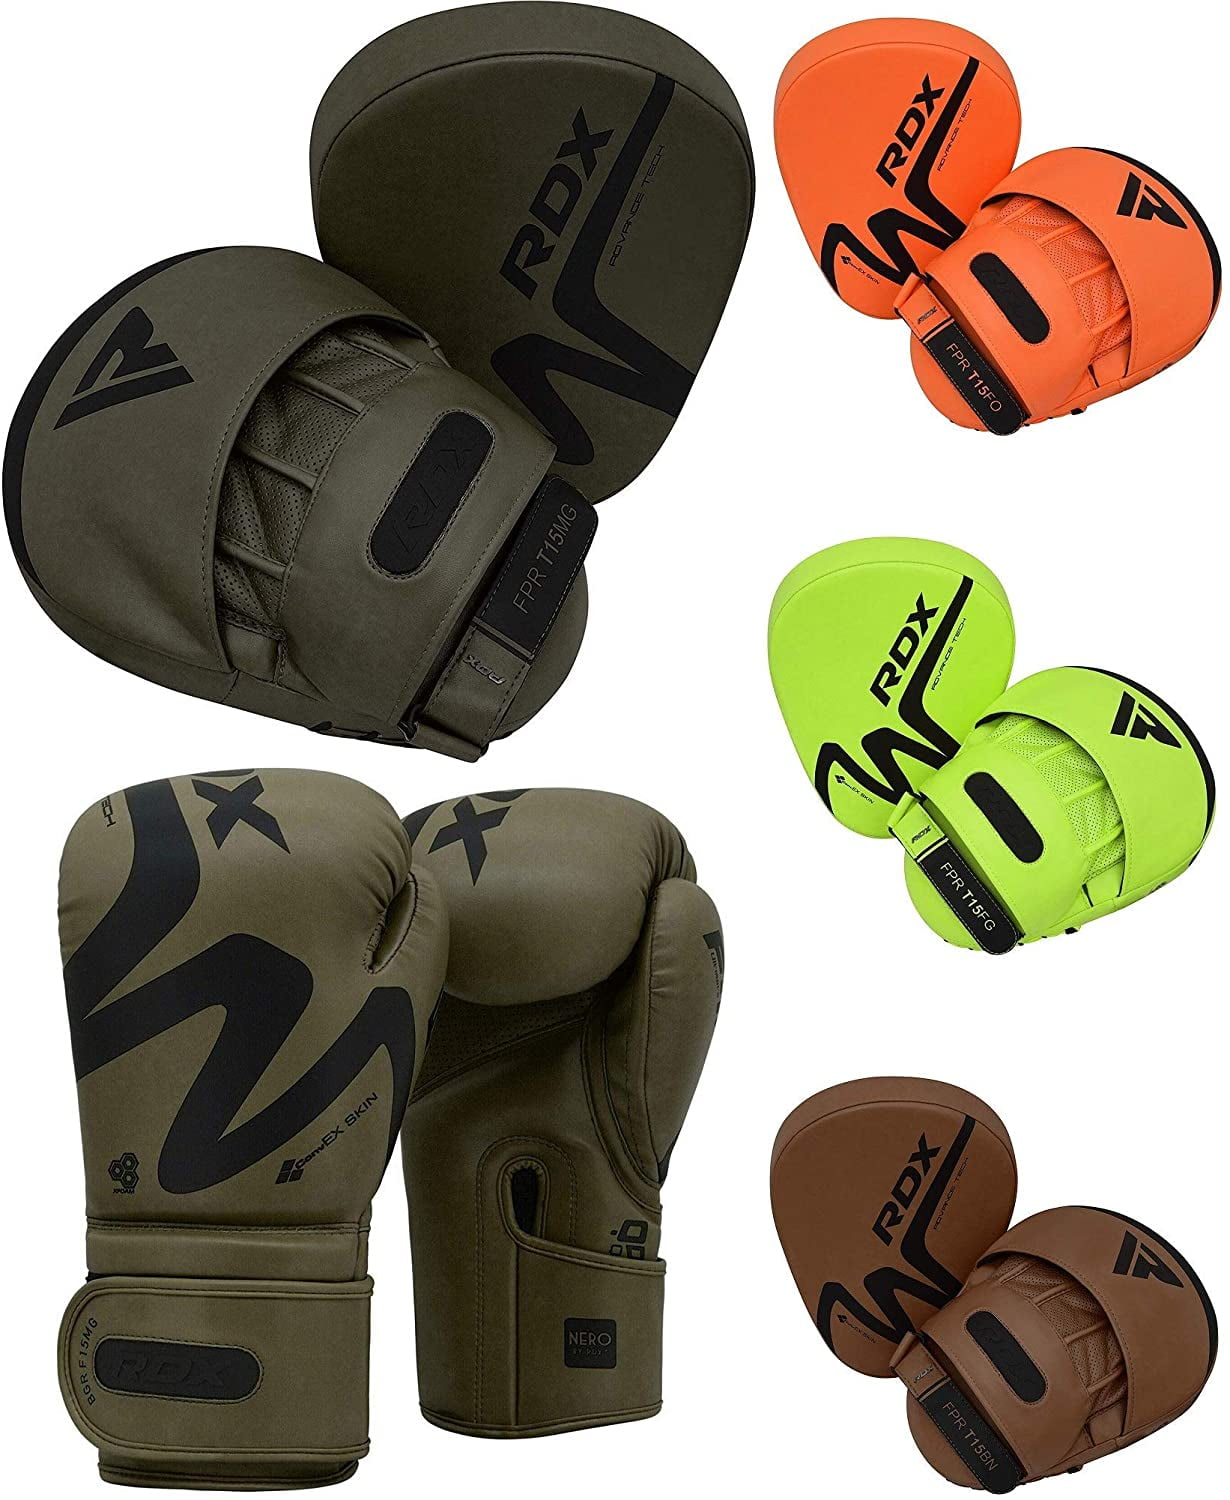 RDX Boxing Pads Training Gloves Focus Mitts MMA Muay Thai Punching Kickboxing 